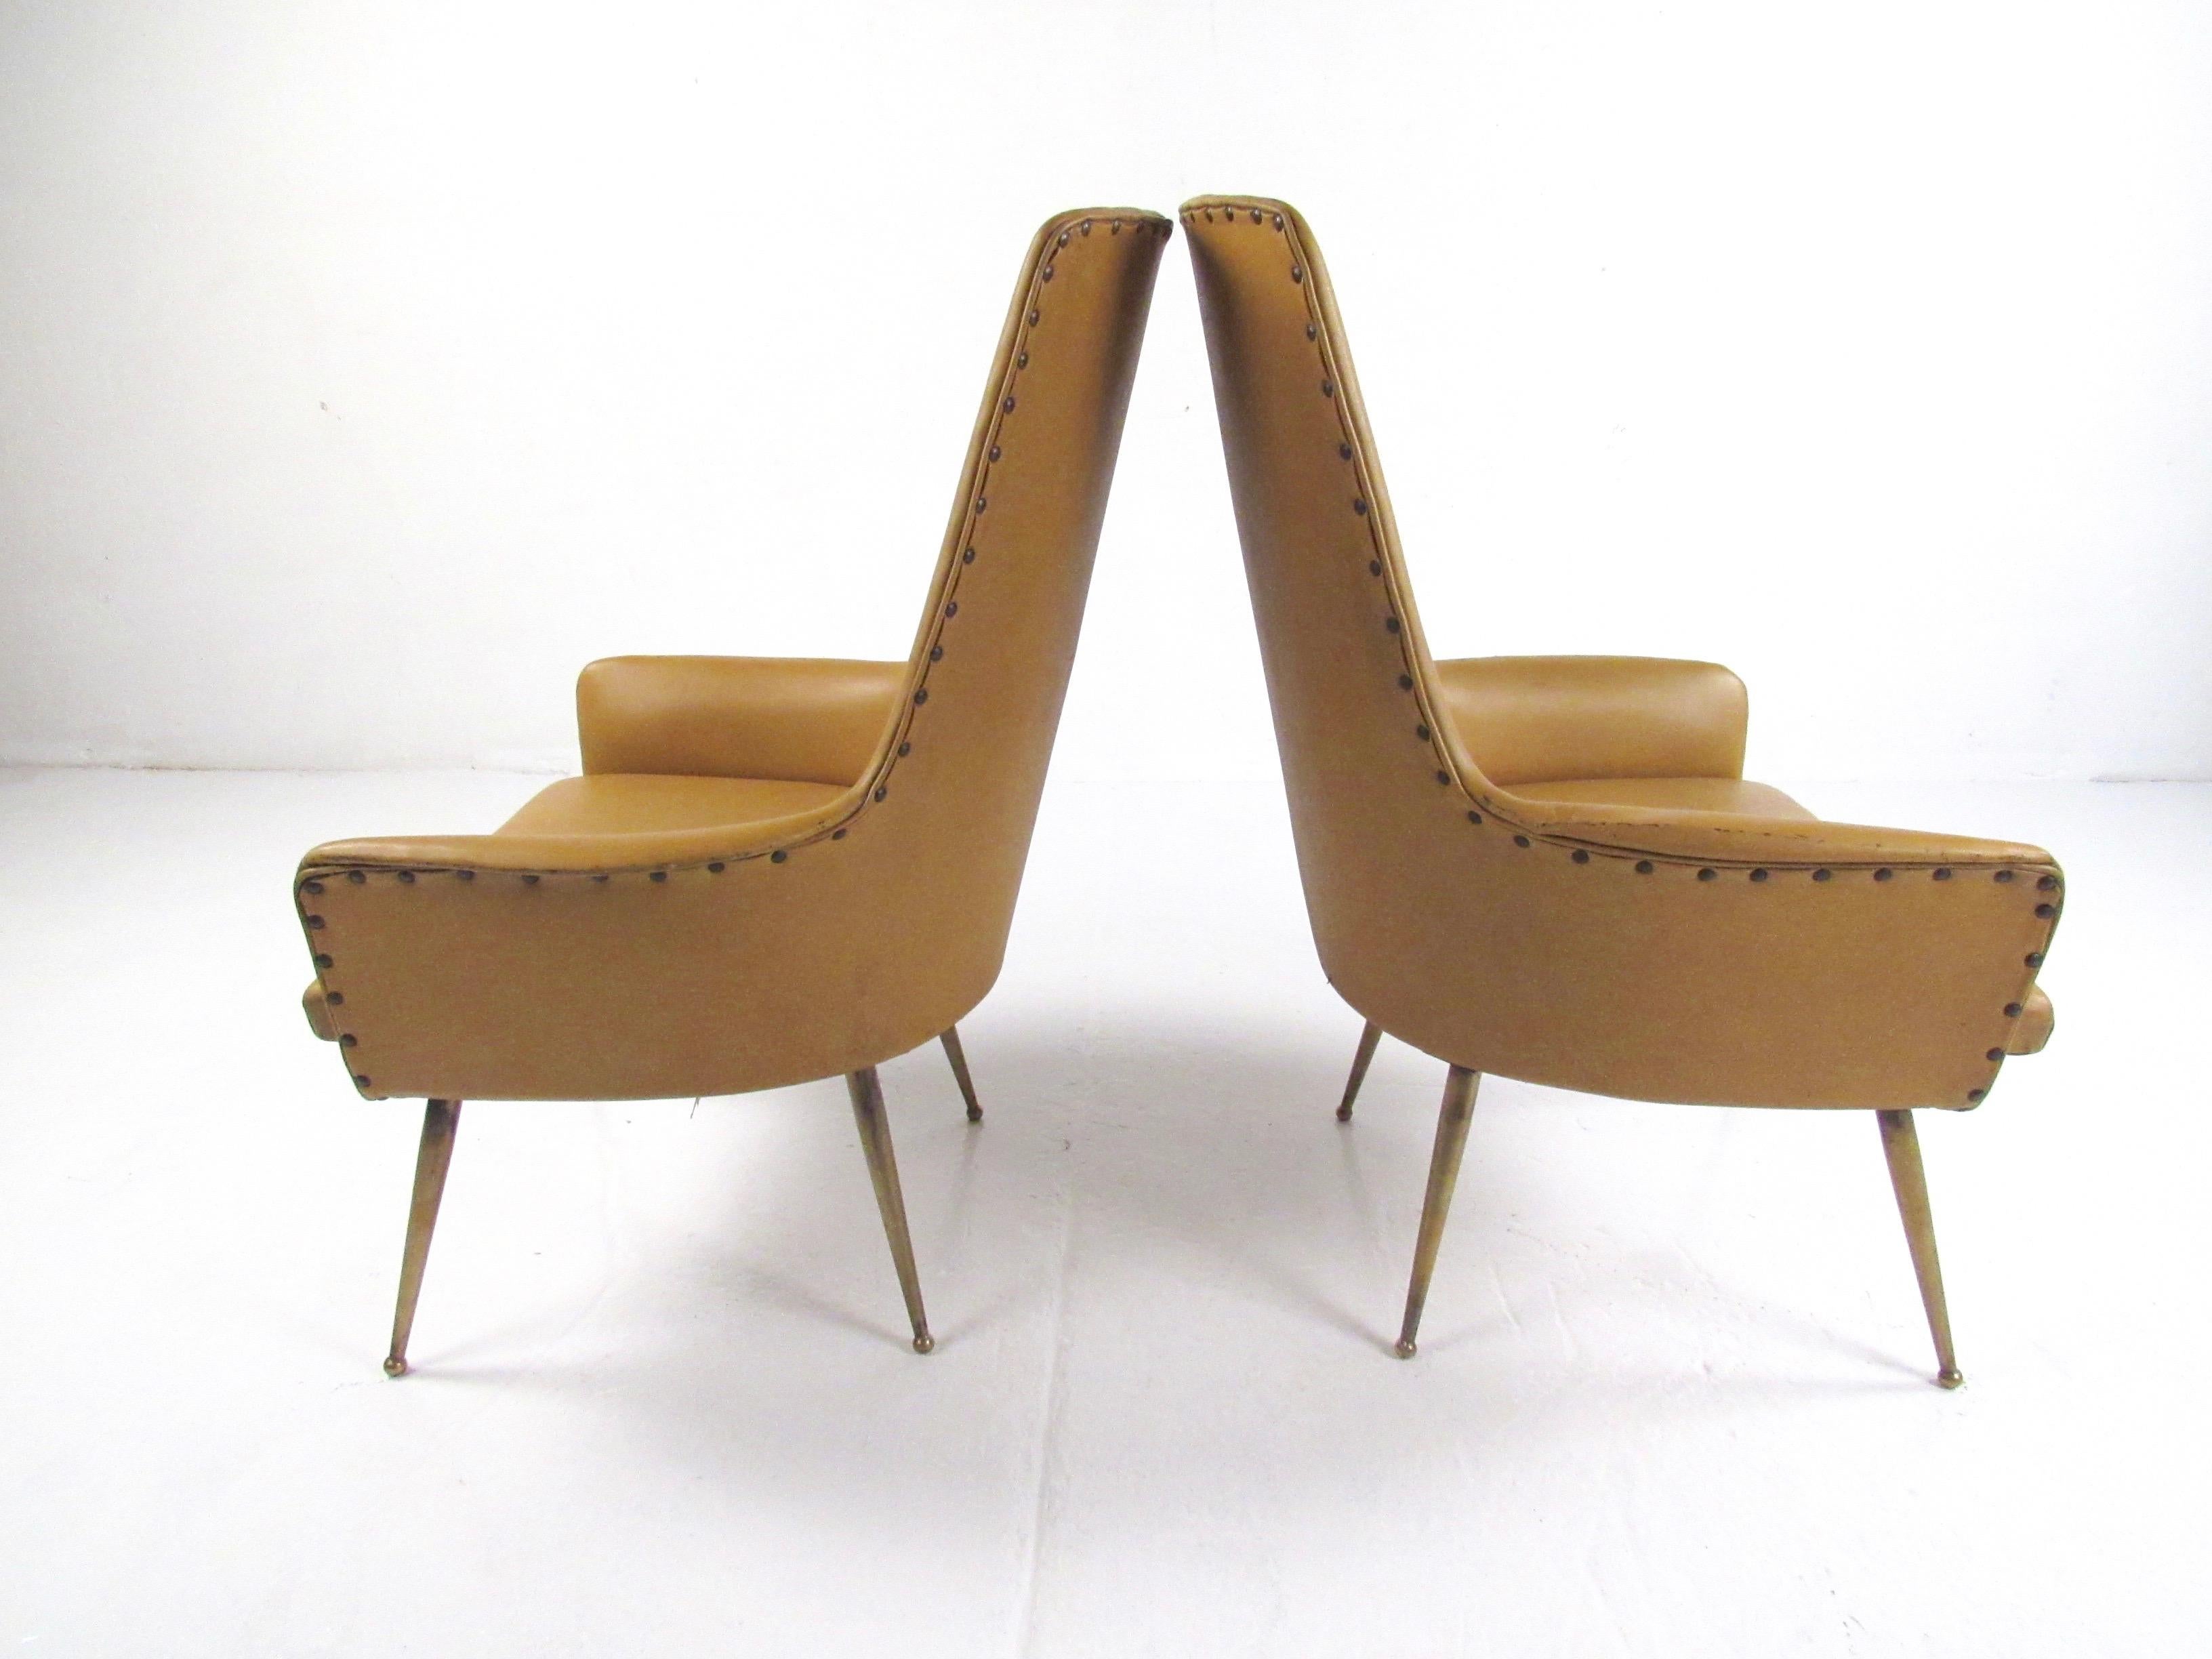 Brass Pair of Italian Modern Side Chairs, circa 1950s